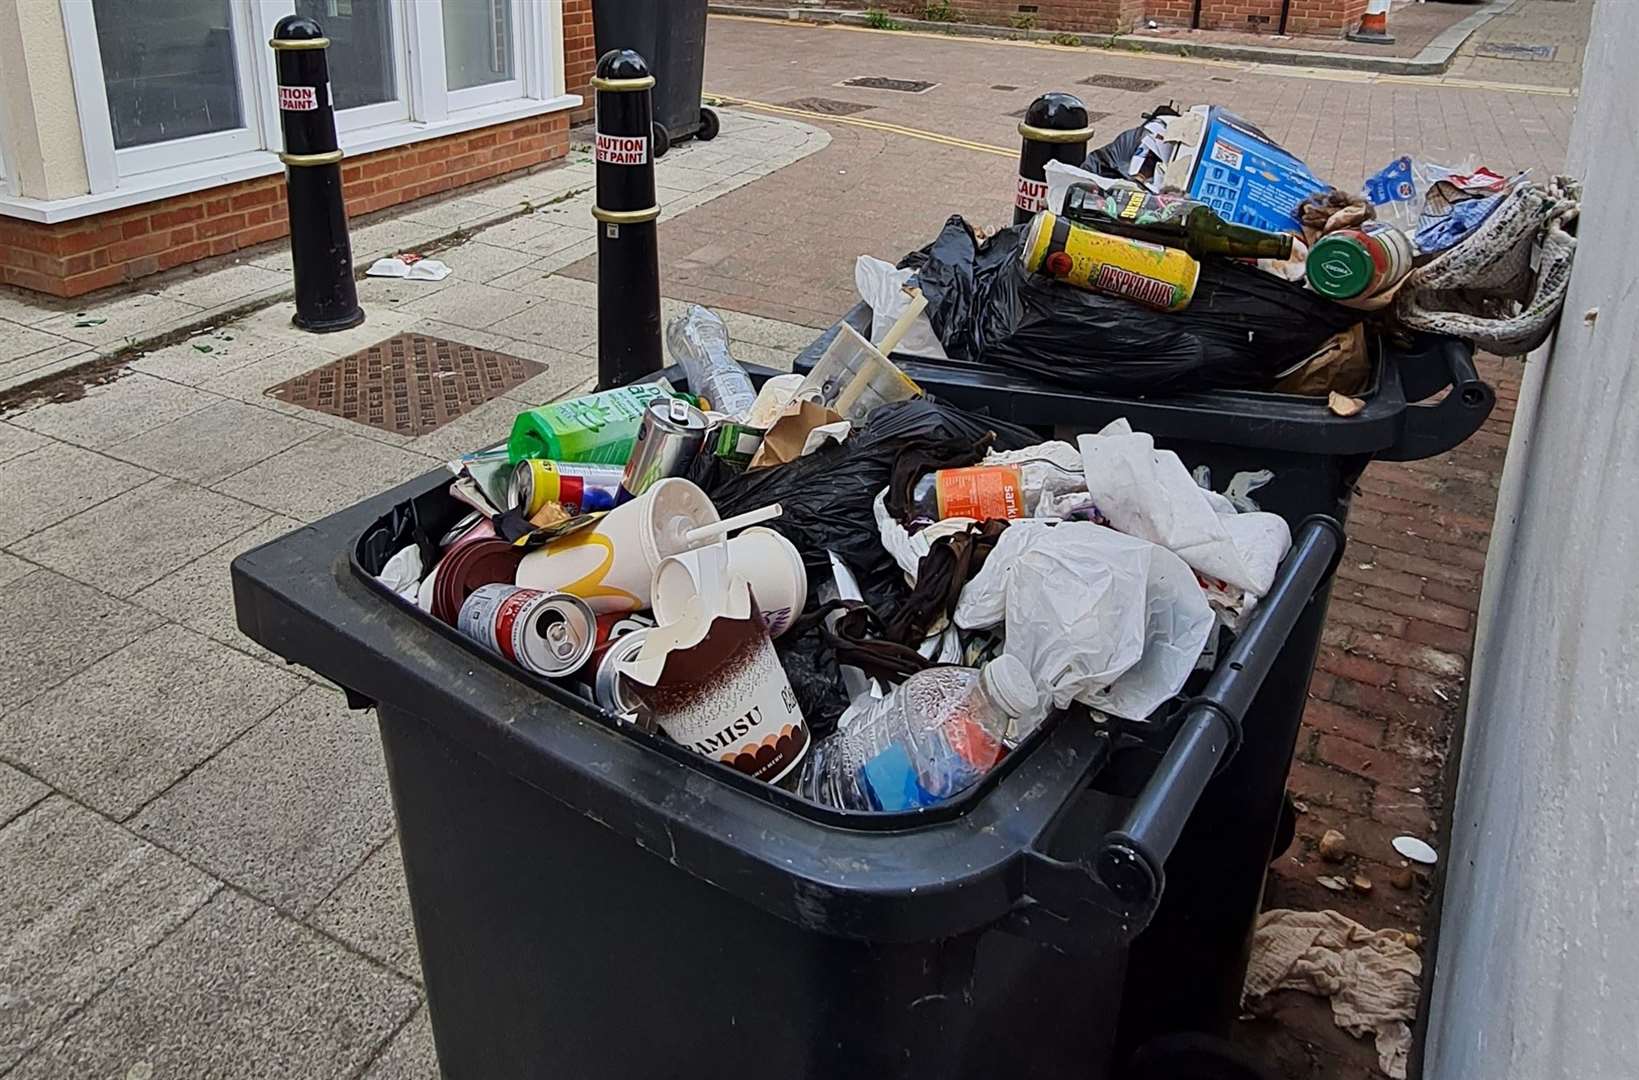 Rubbish bins overflowing surround the flats